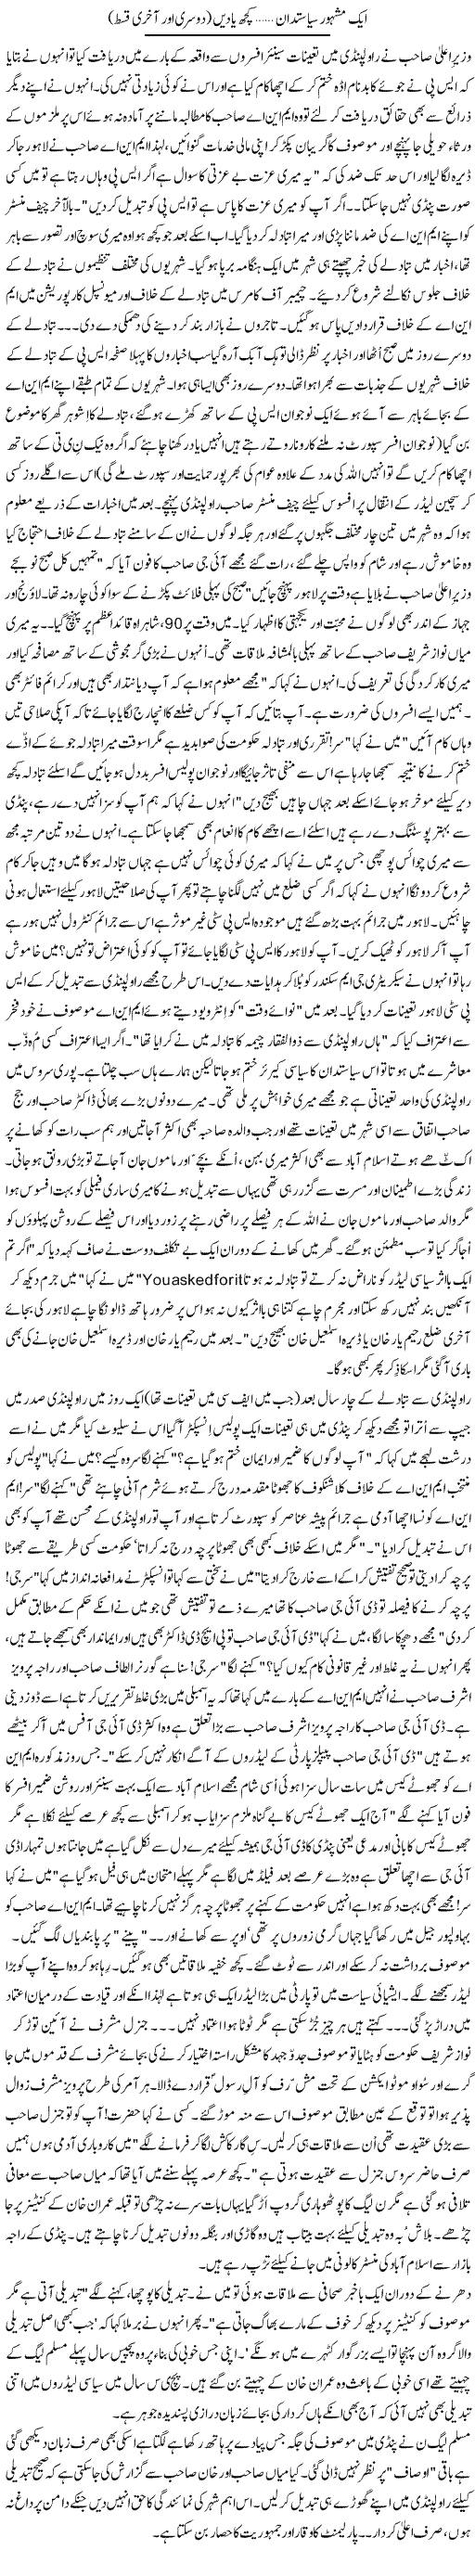 Aik Mashhoor Sayasatdan, Kuch Yaden 2 | Zulfiqar Ahmed Cheema | Daily Urdu Columns